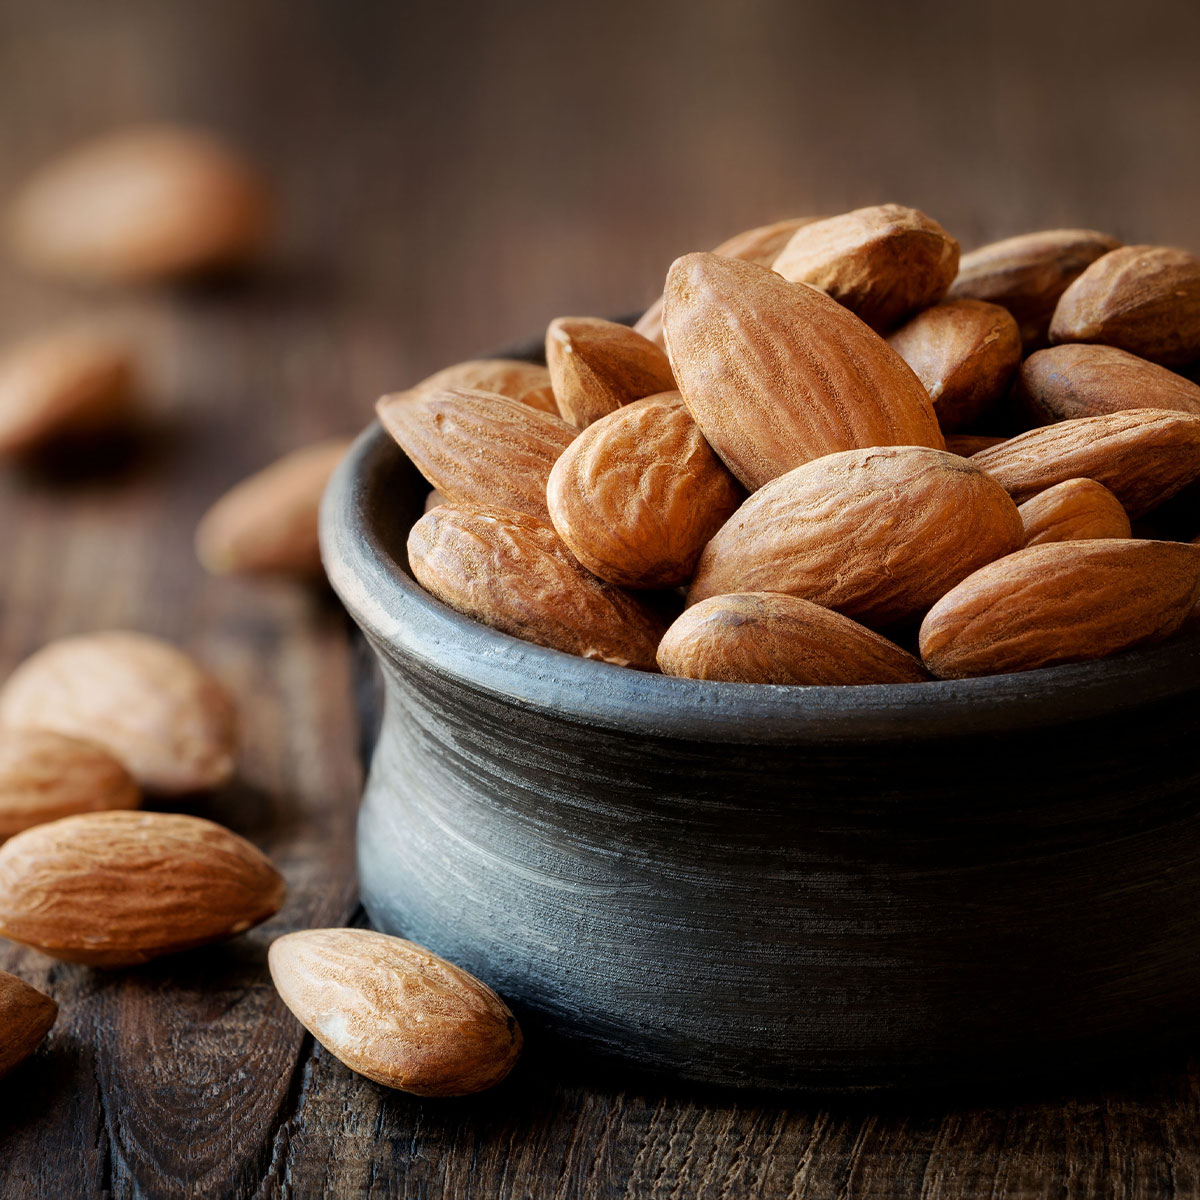 Increasing Popularity of Almonds in Australia